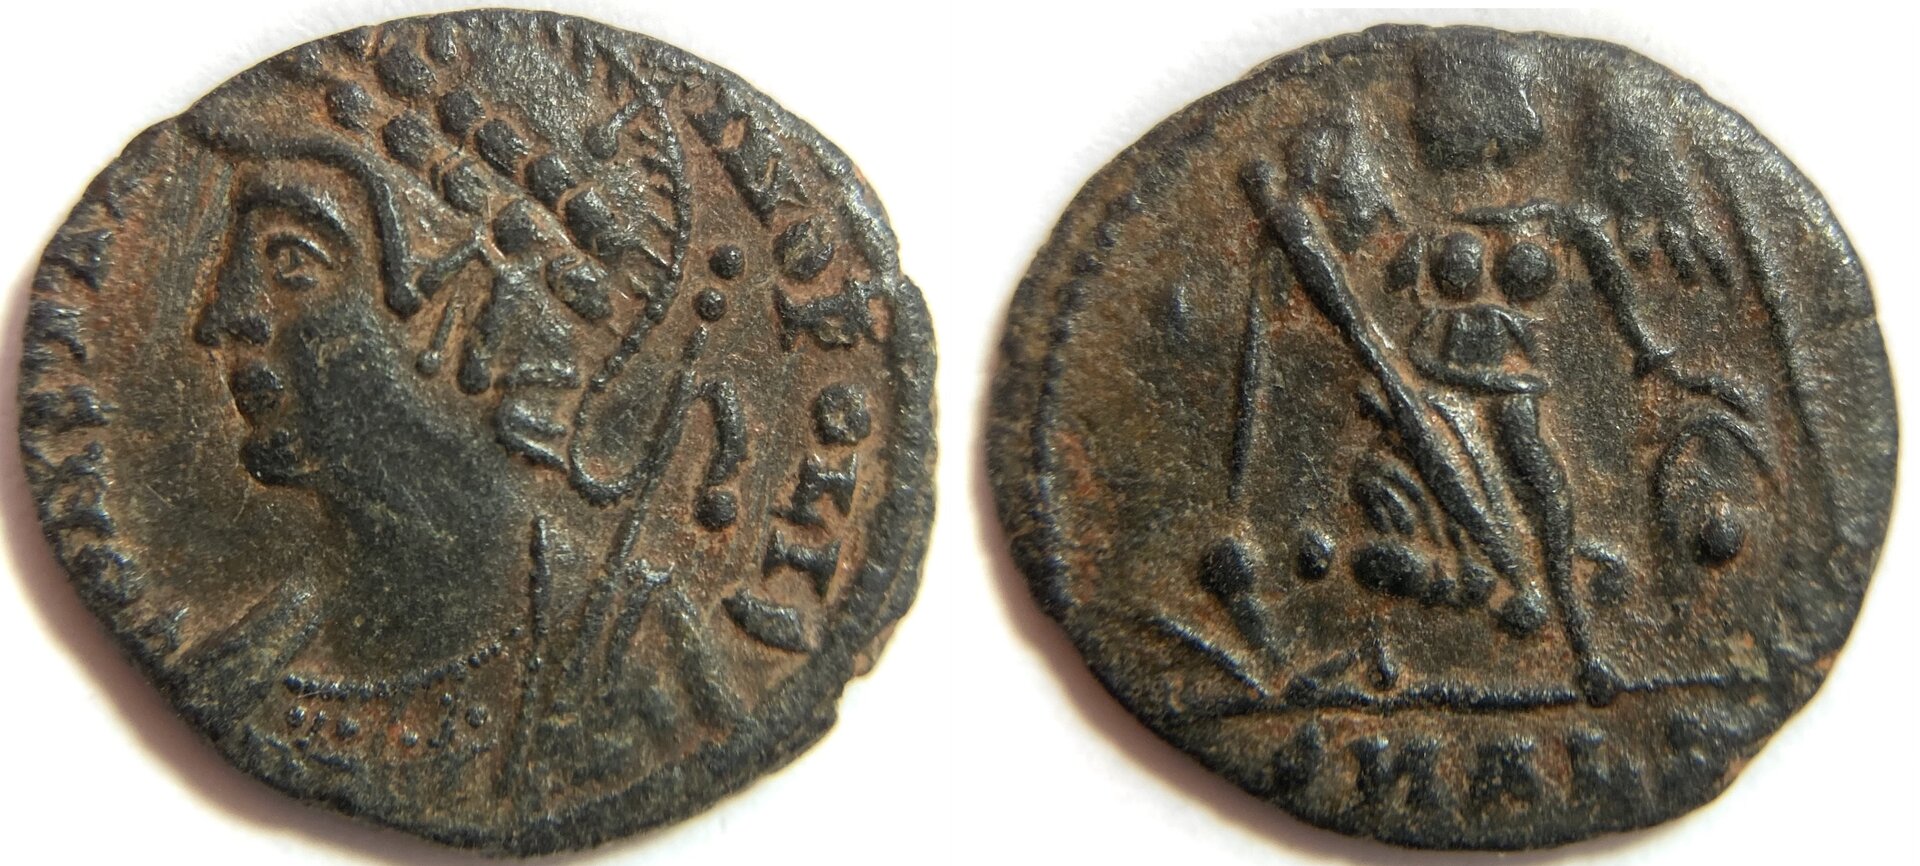 Constantinopolis RIC VII Alexandria 64.JPG